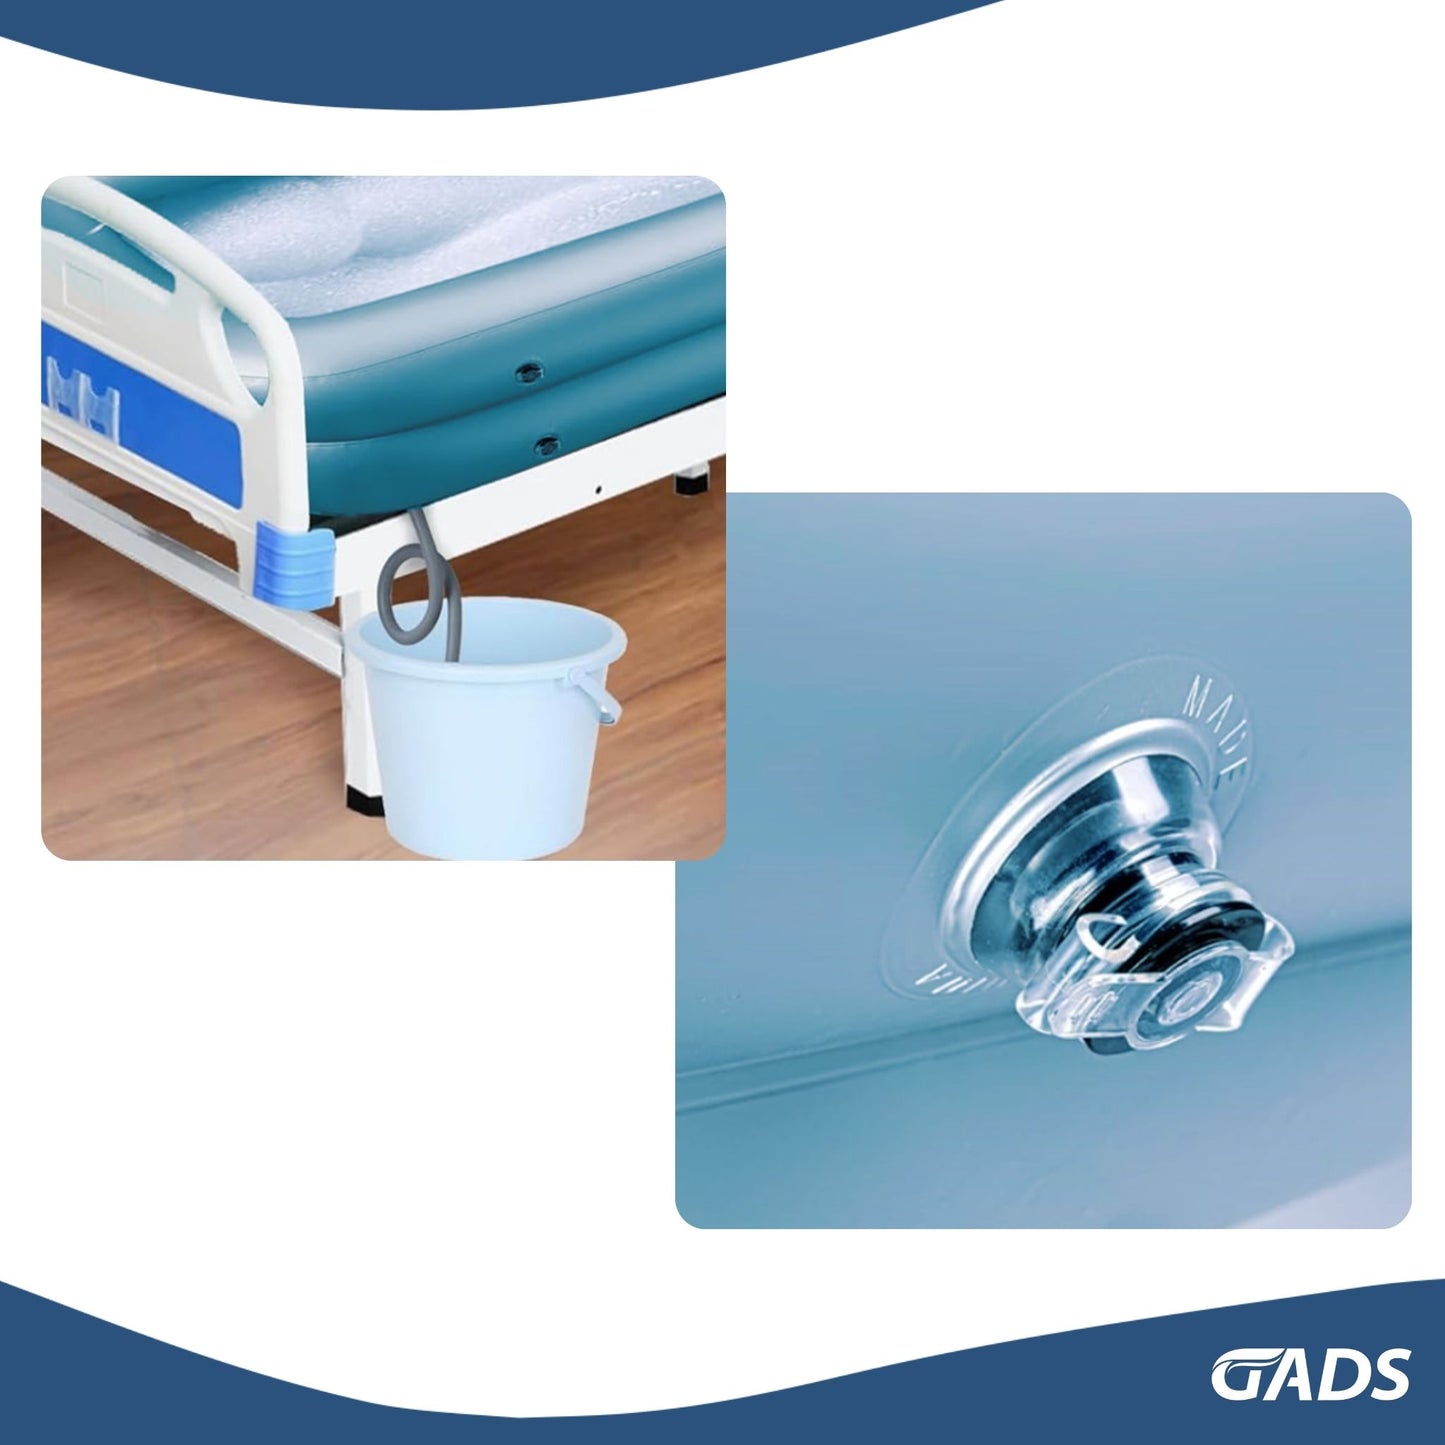 GADS Advanced Medical Inflatable Bathtub – Portable, Safe Bath Solution for Elderly, Disabled, Bedridden – with Electric Air Pump